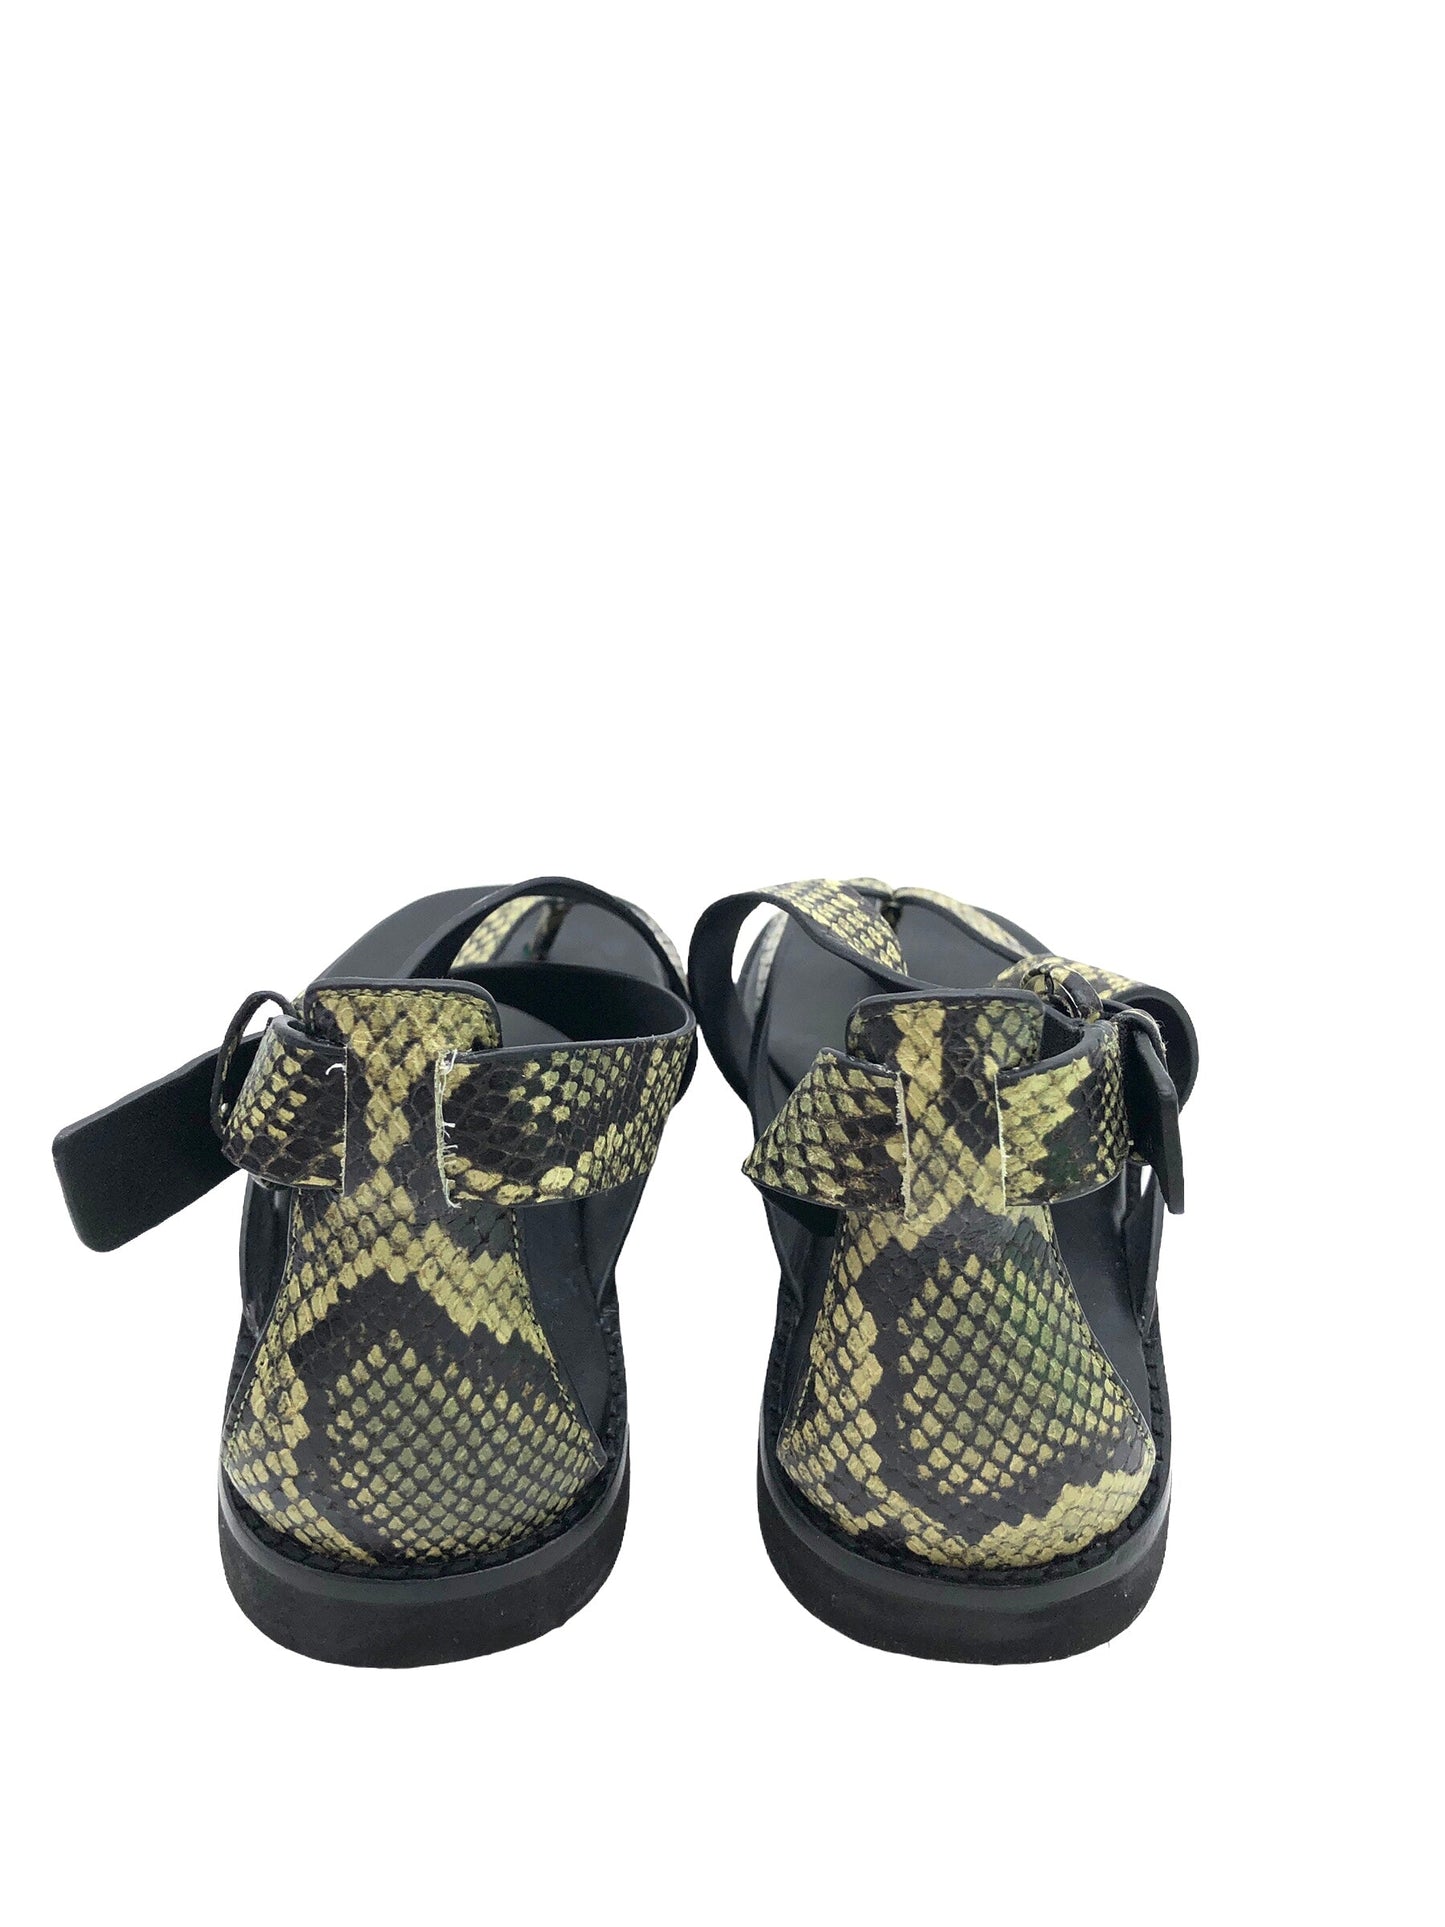 Black & Green Sandals Flats Vince, Size 7